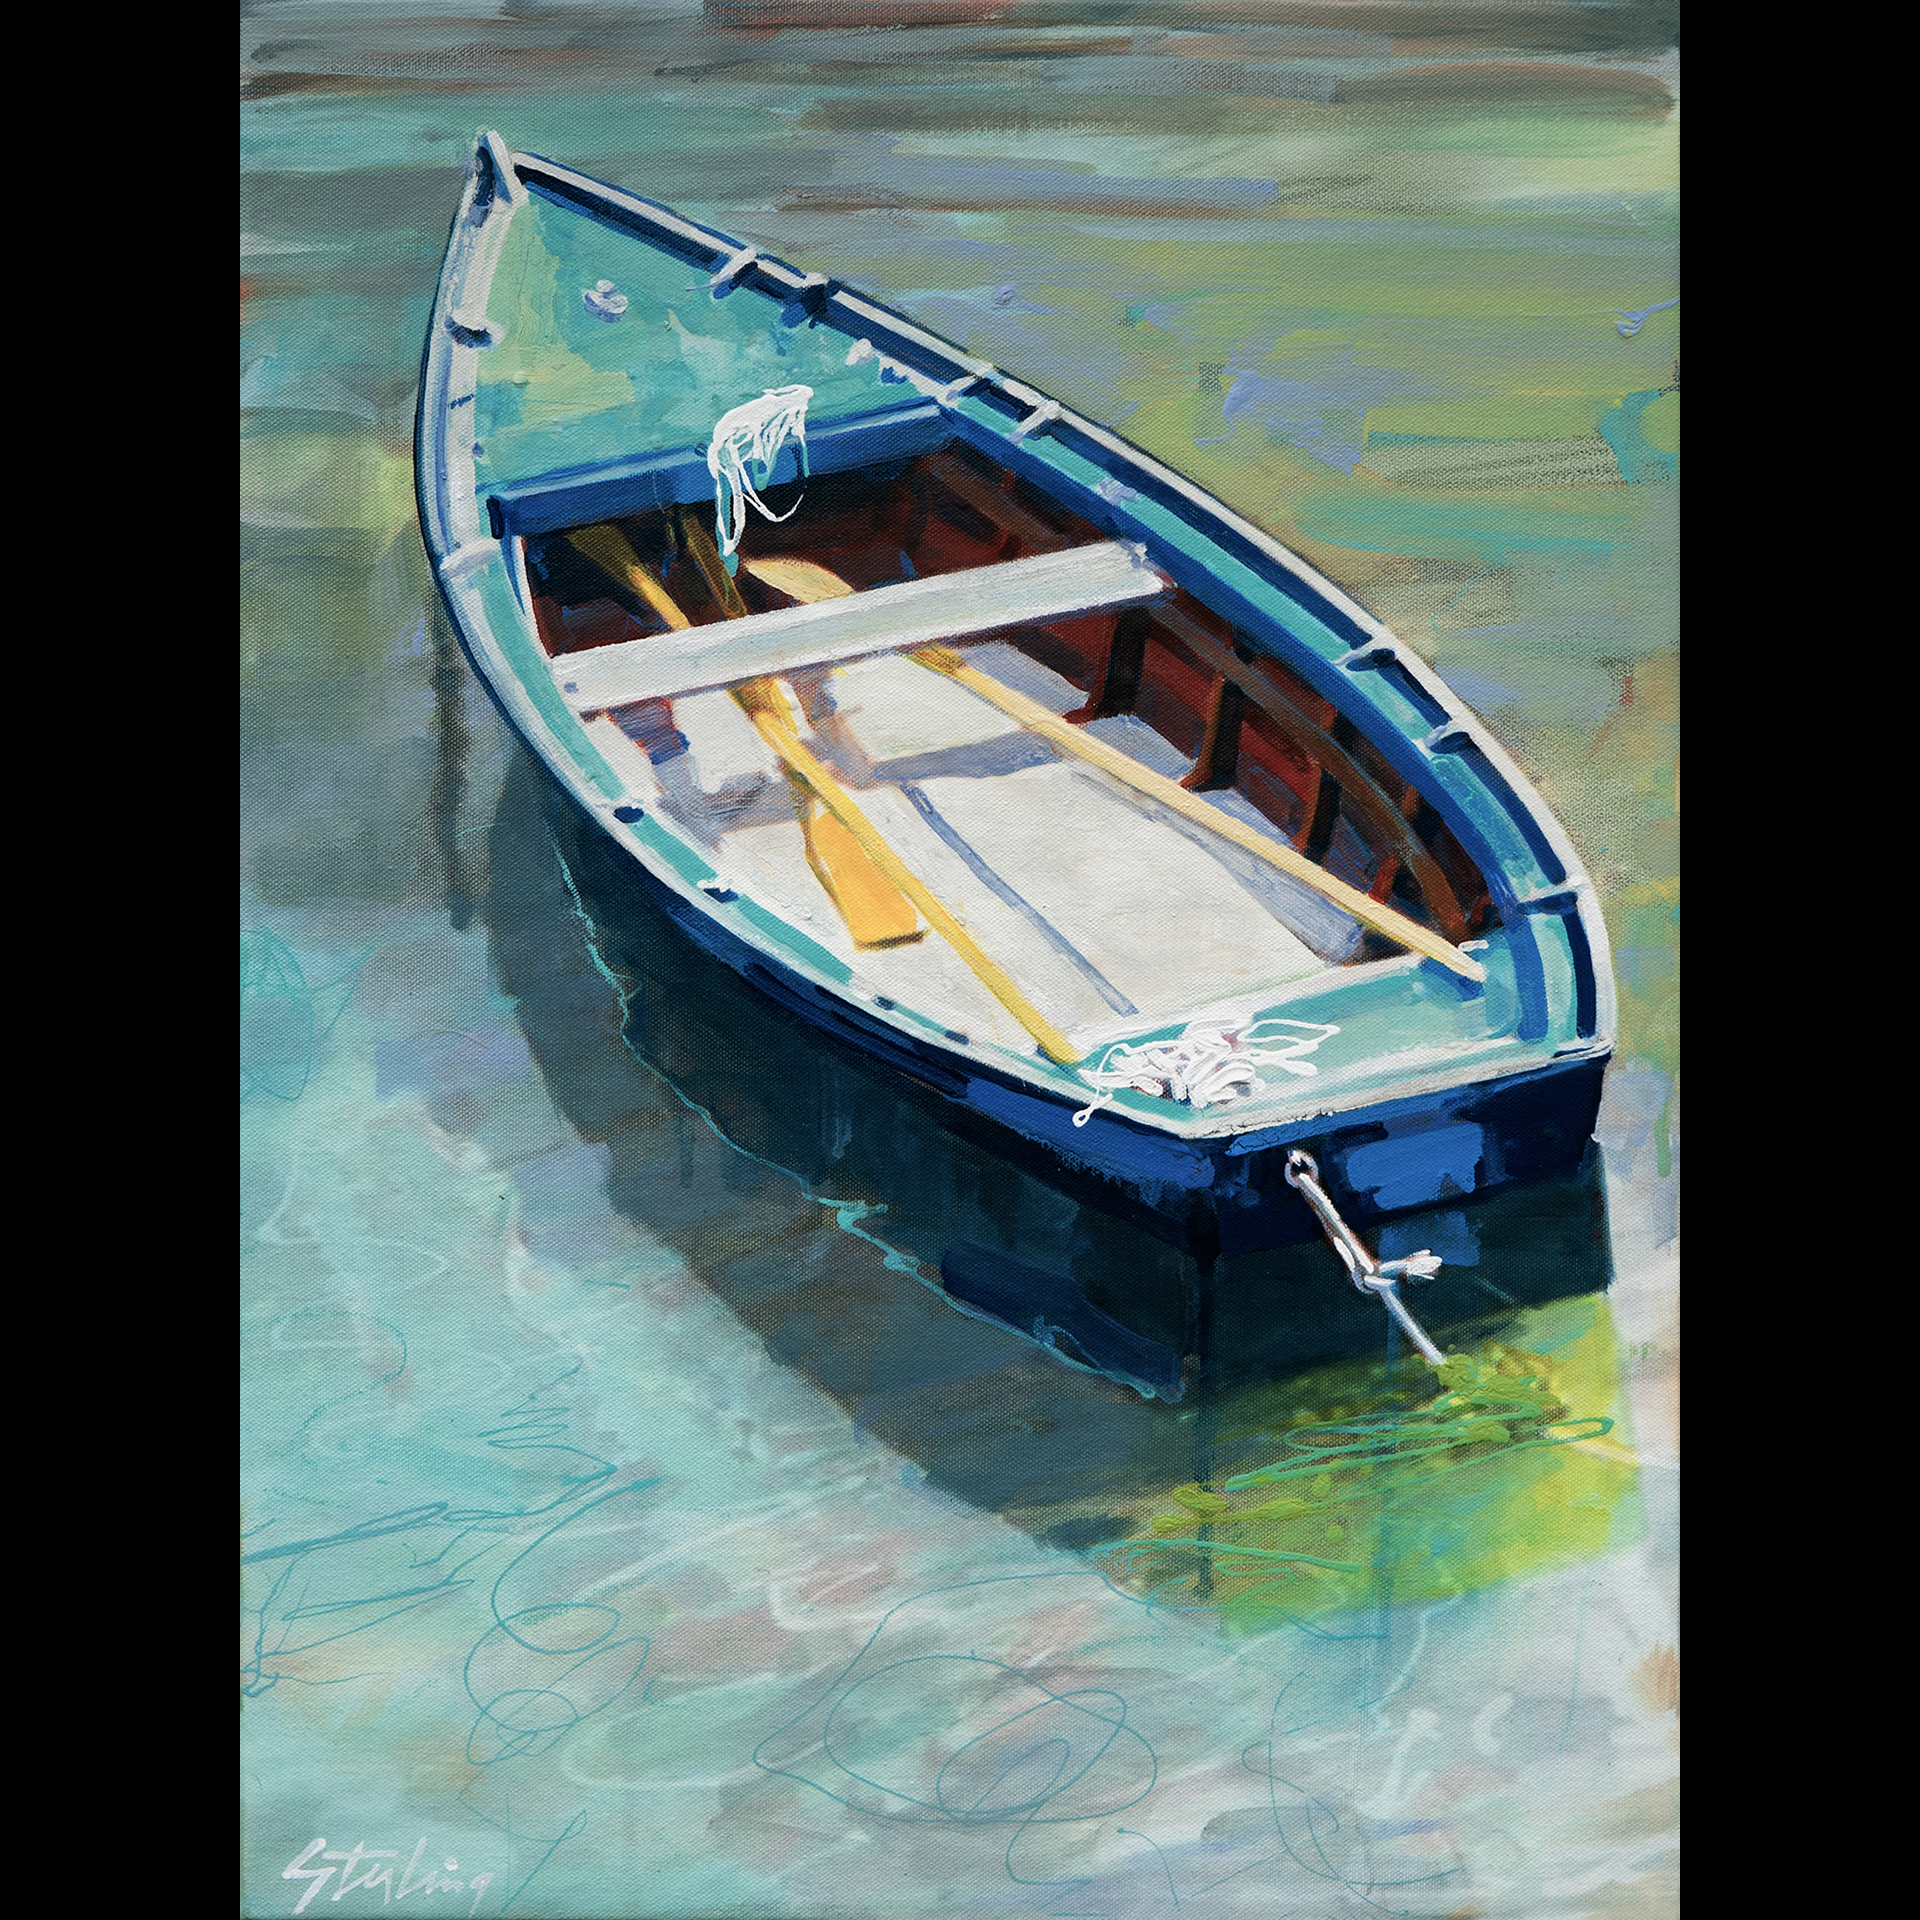 Dreamboat
acrylic on canvas
18x24